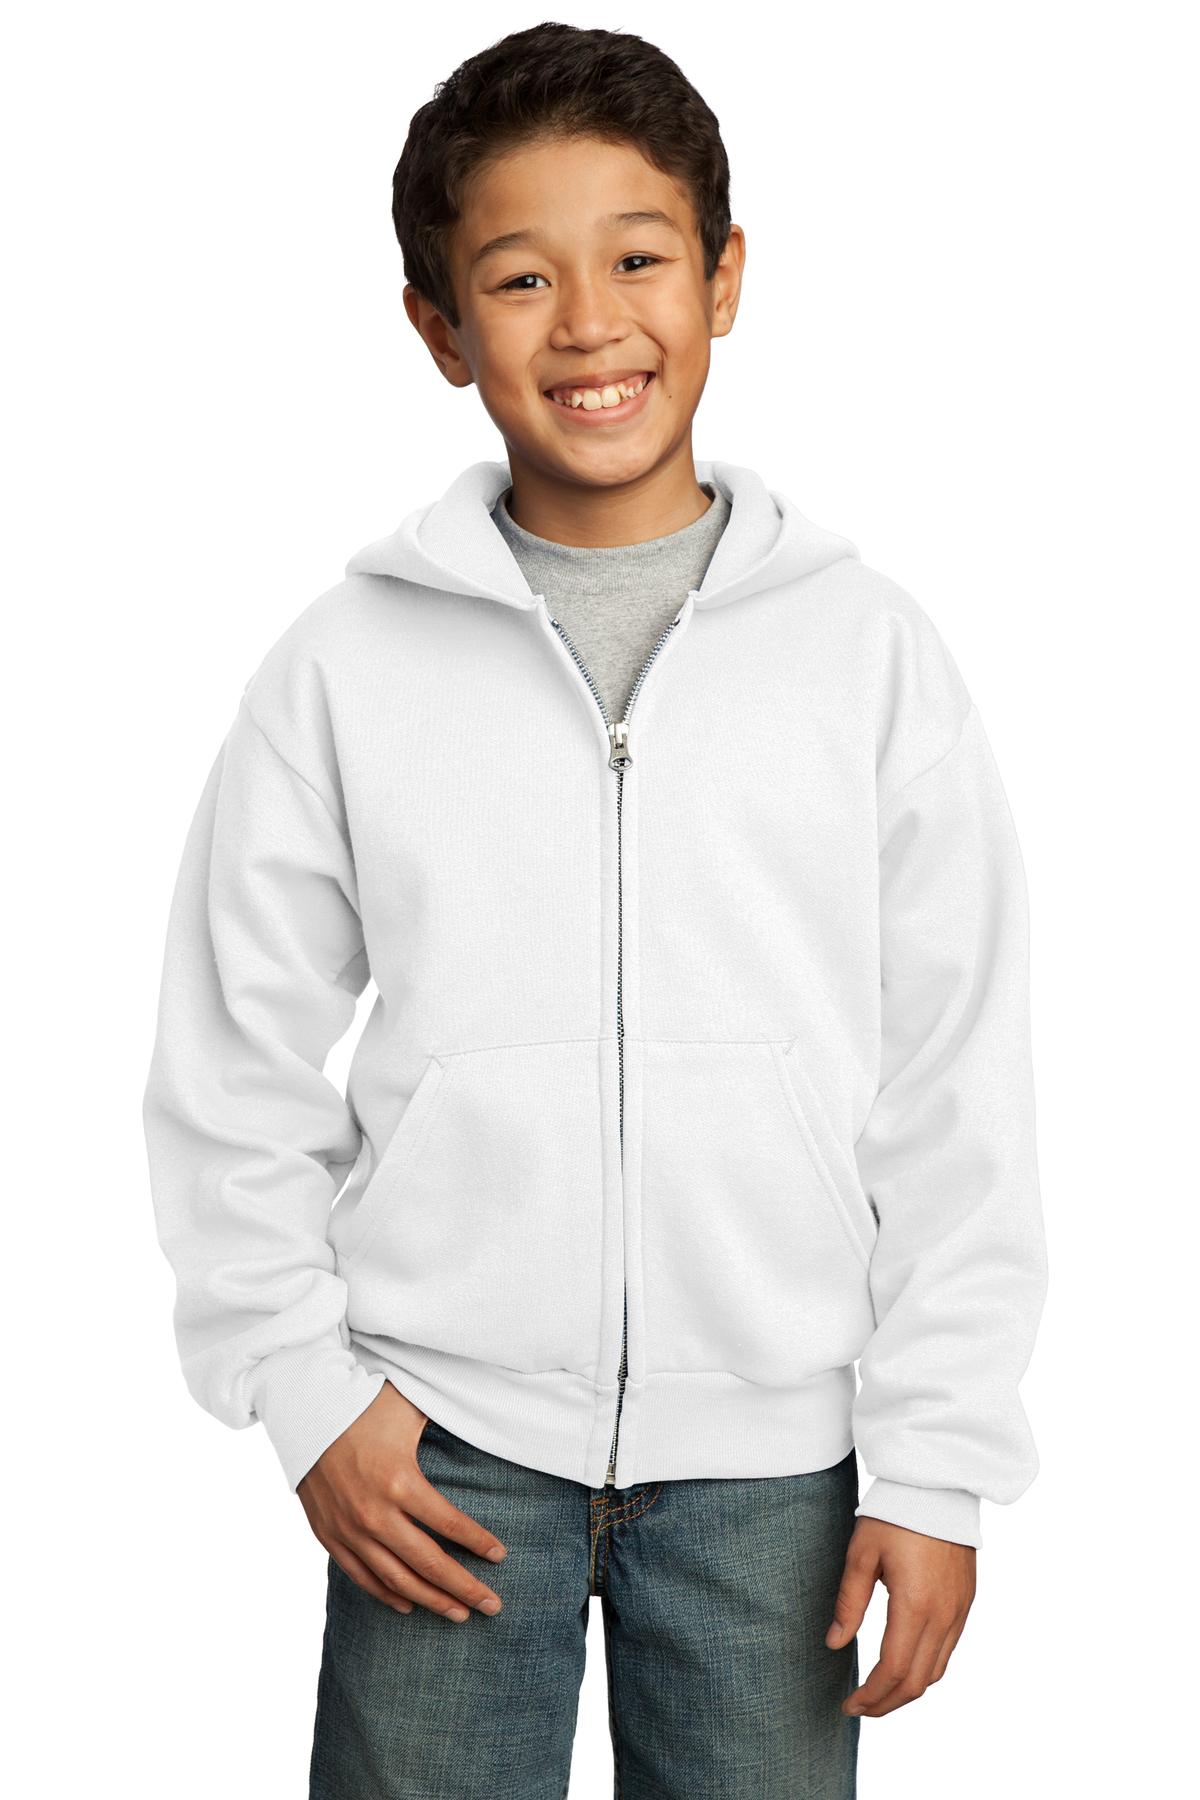 Port &#38; Company &#45; Youth Core Fleece Full&#45;Zip Hooded Sweatshirt-Port & Company